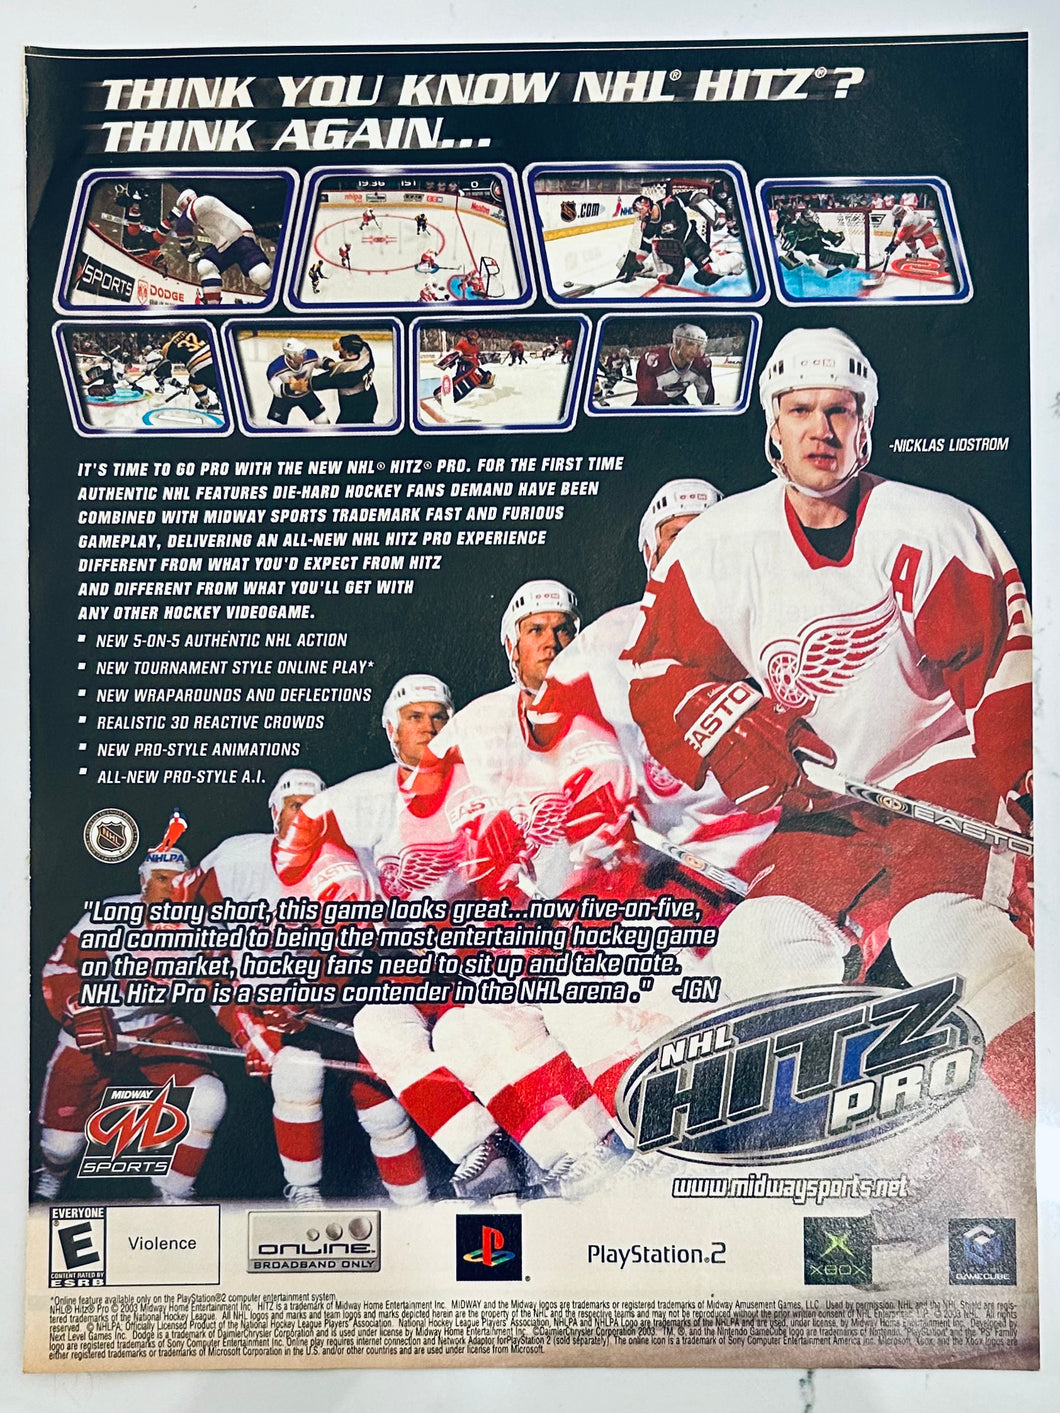 NHL Hitz Pro - PS2 NGC Xbox - Original Vintage Advertisement - Print Ads - Laminated A4 Poster